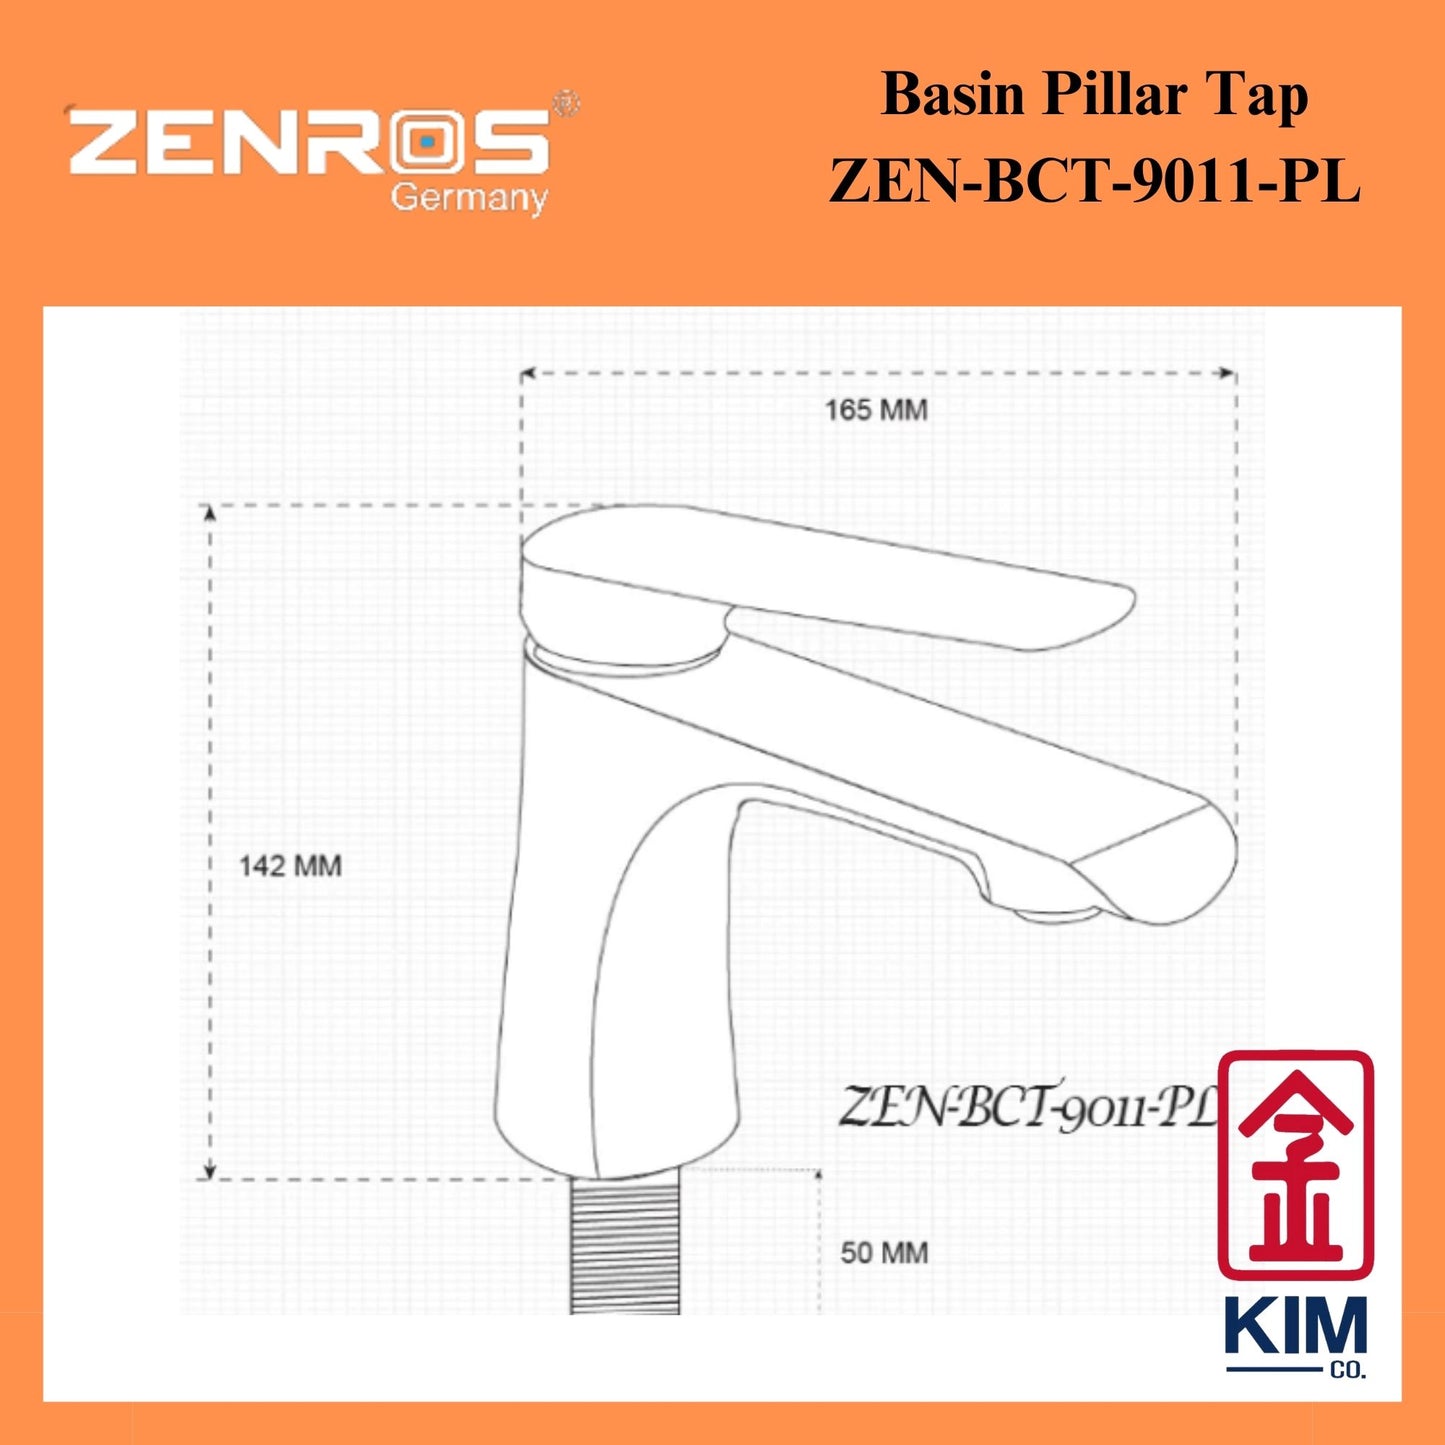 Zenros Basin Pillar Tap (ZEN-BCT-9011-PL)